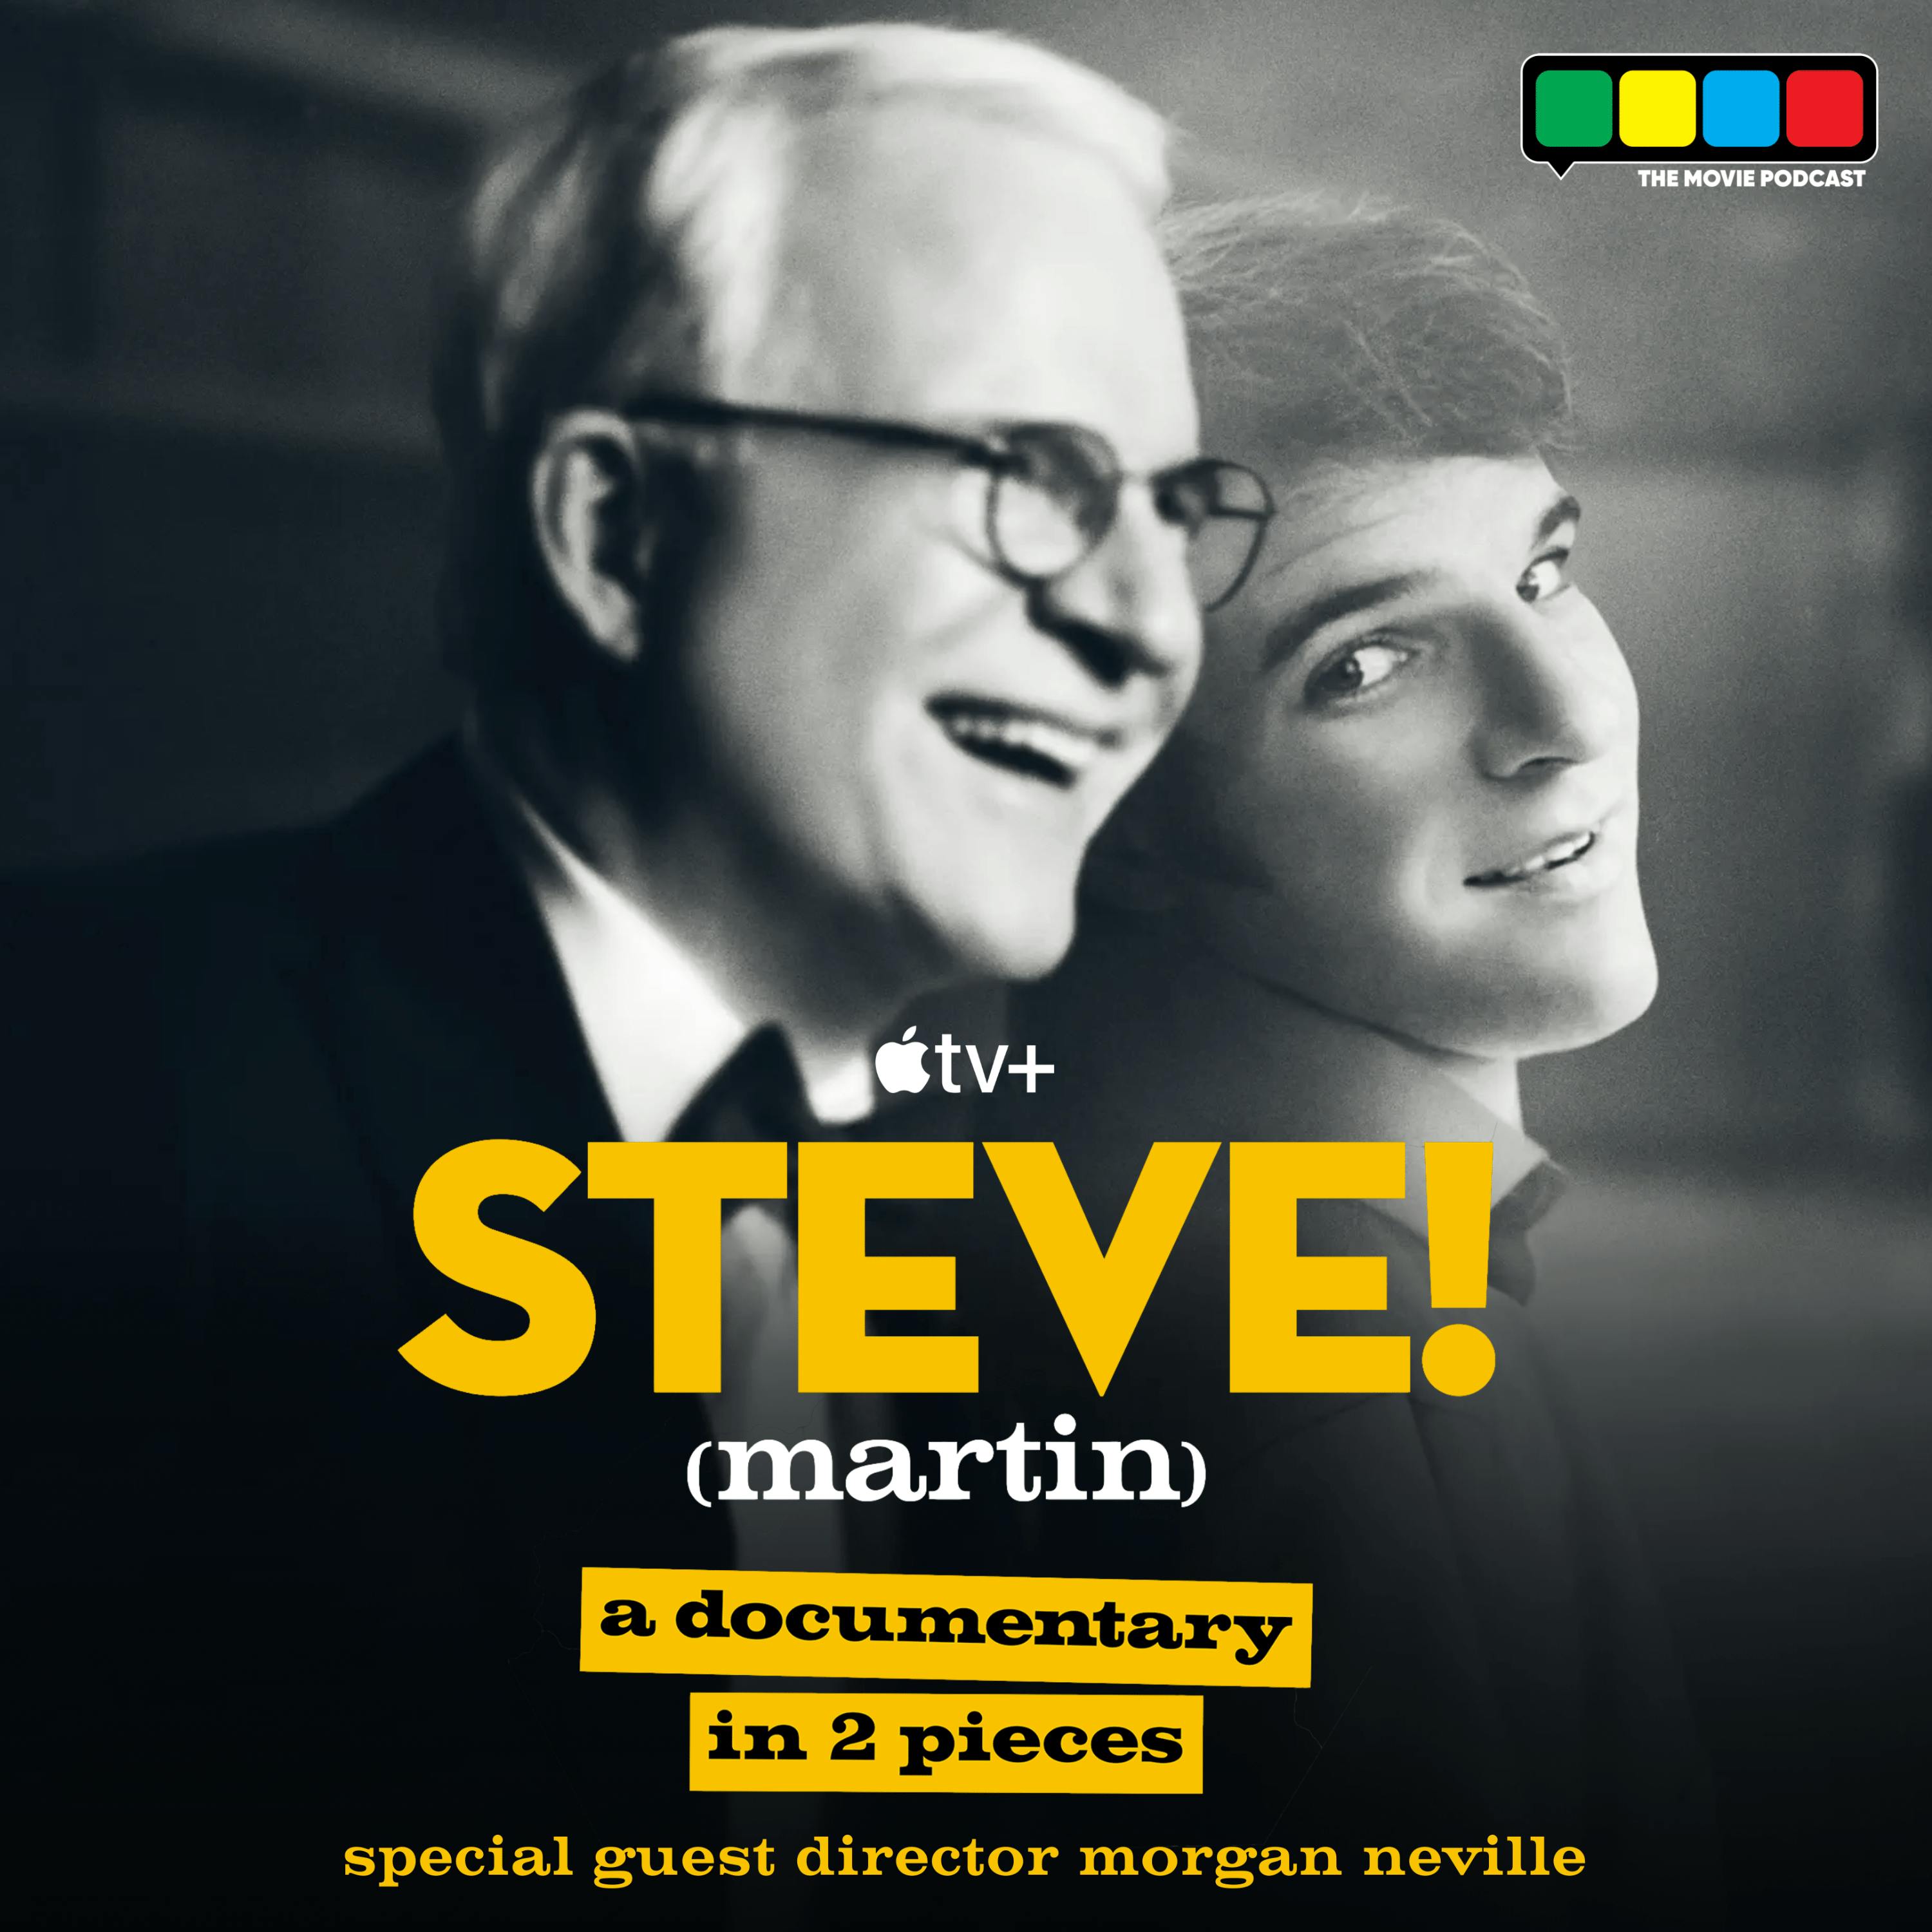 Morgan Neville Gives Steve Martin the Documentary Treatment in STEVE! (martin) a documentary in 2 pieces - Interview